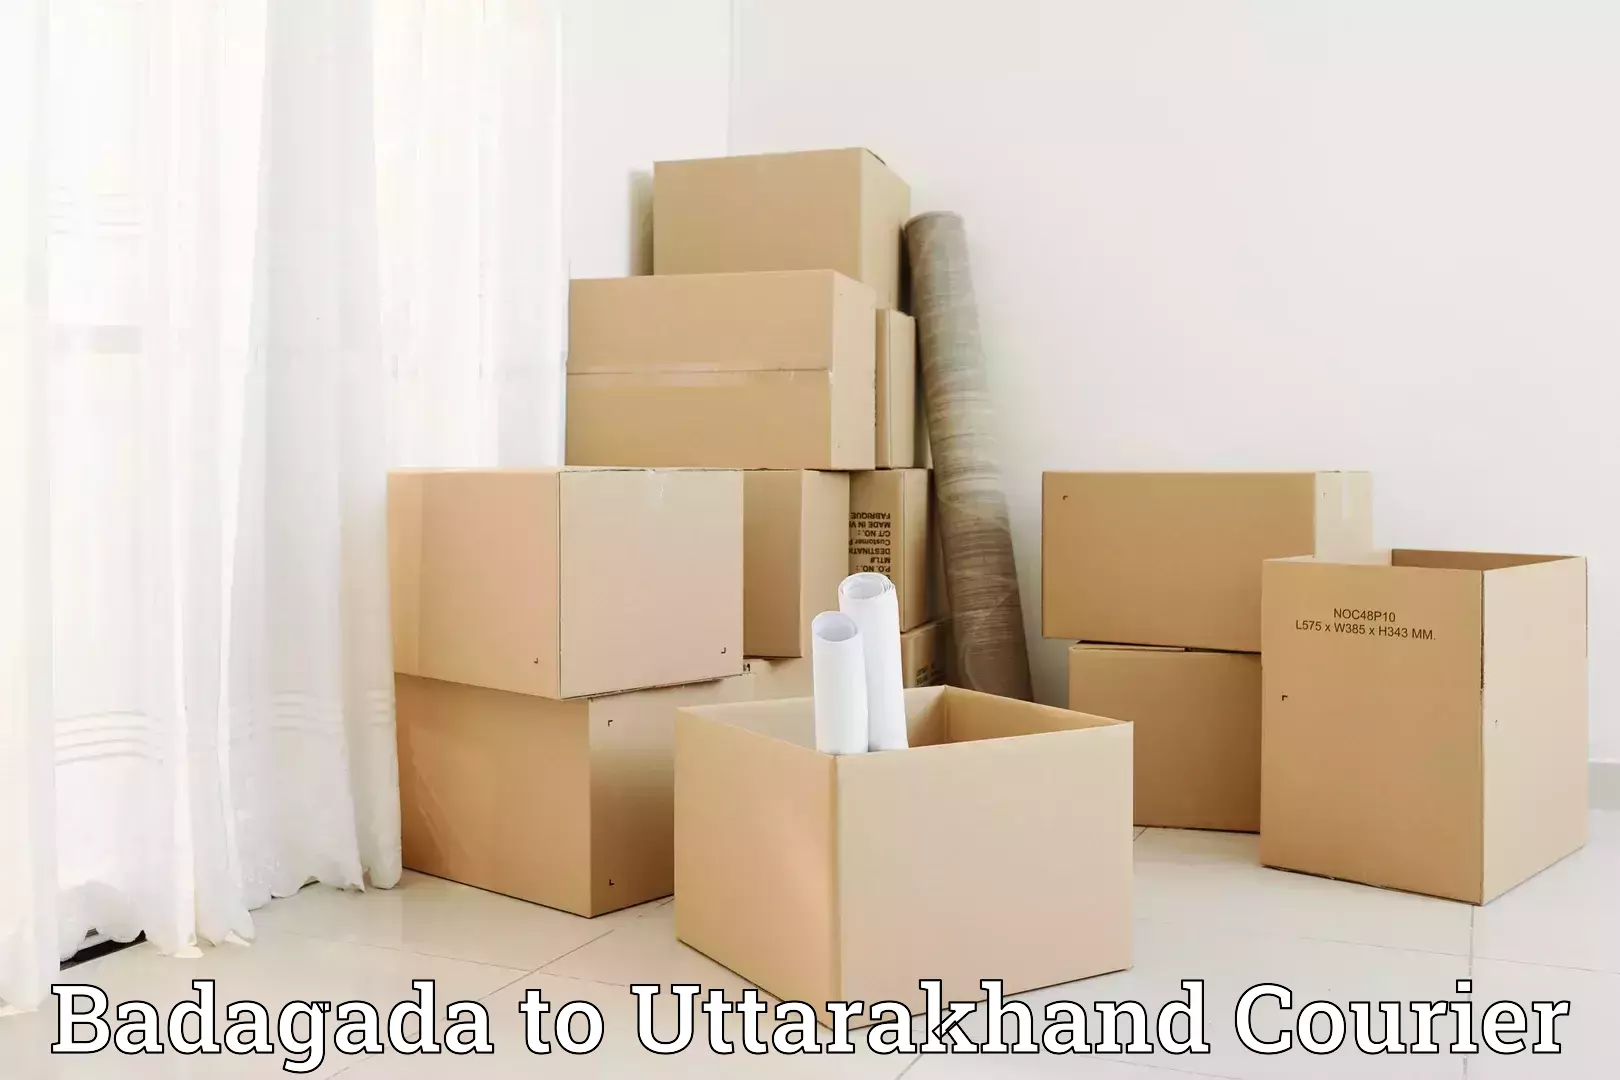 Furniture delivery service Badagada to IIT Roorkee